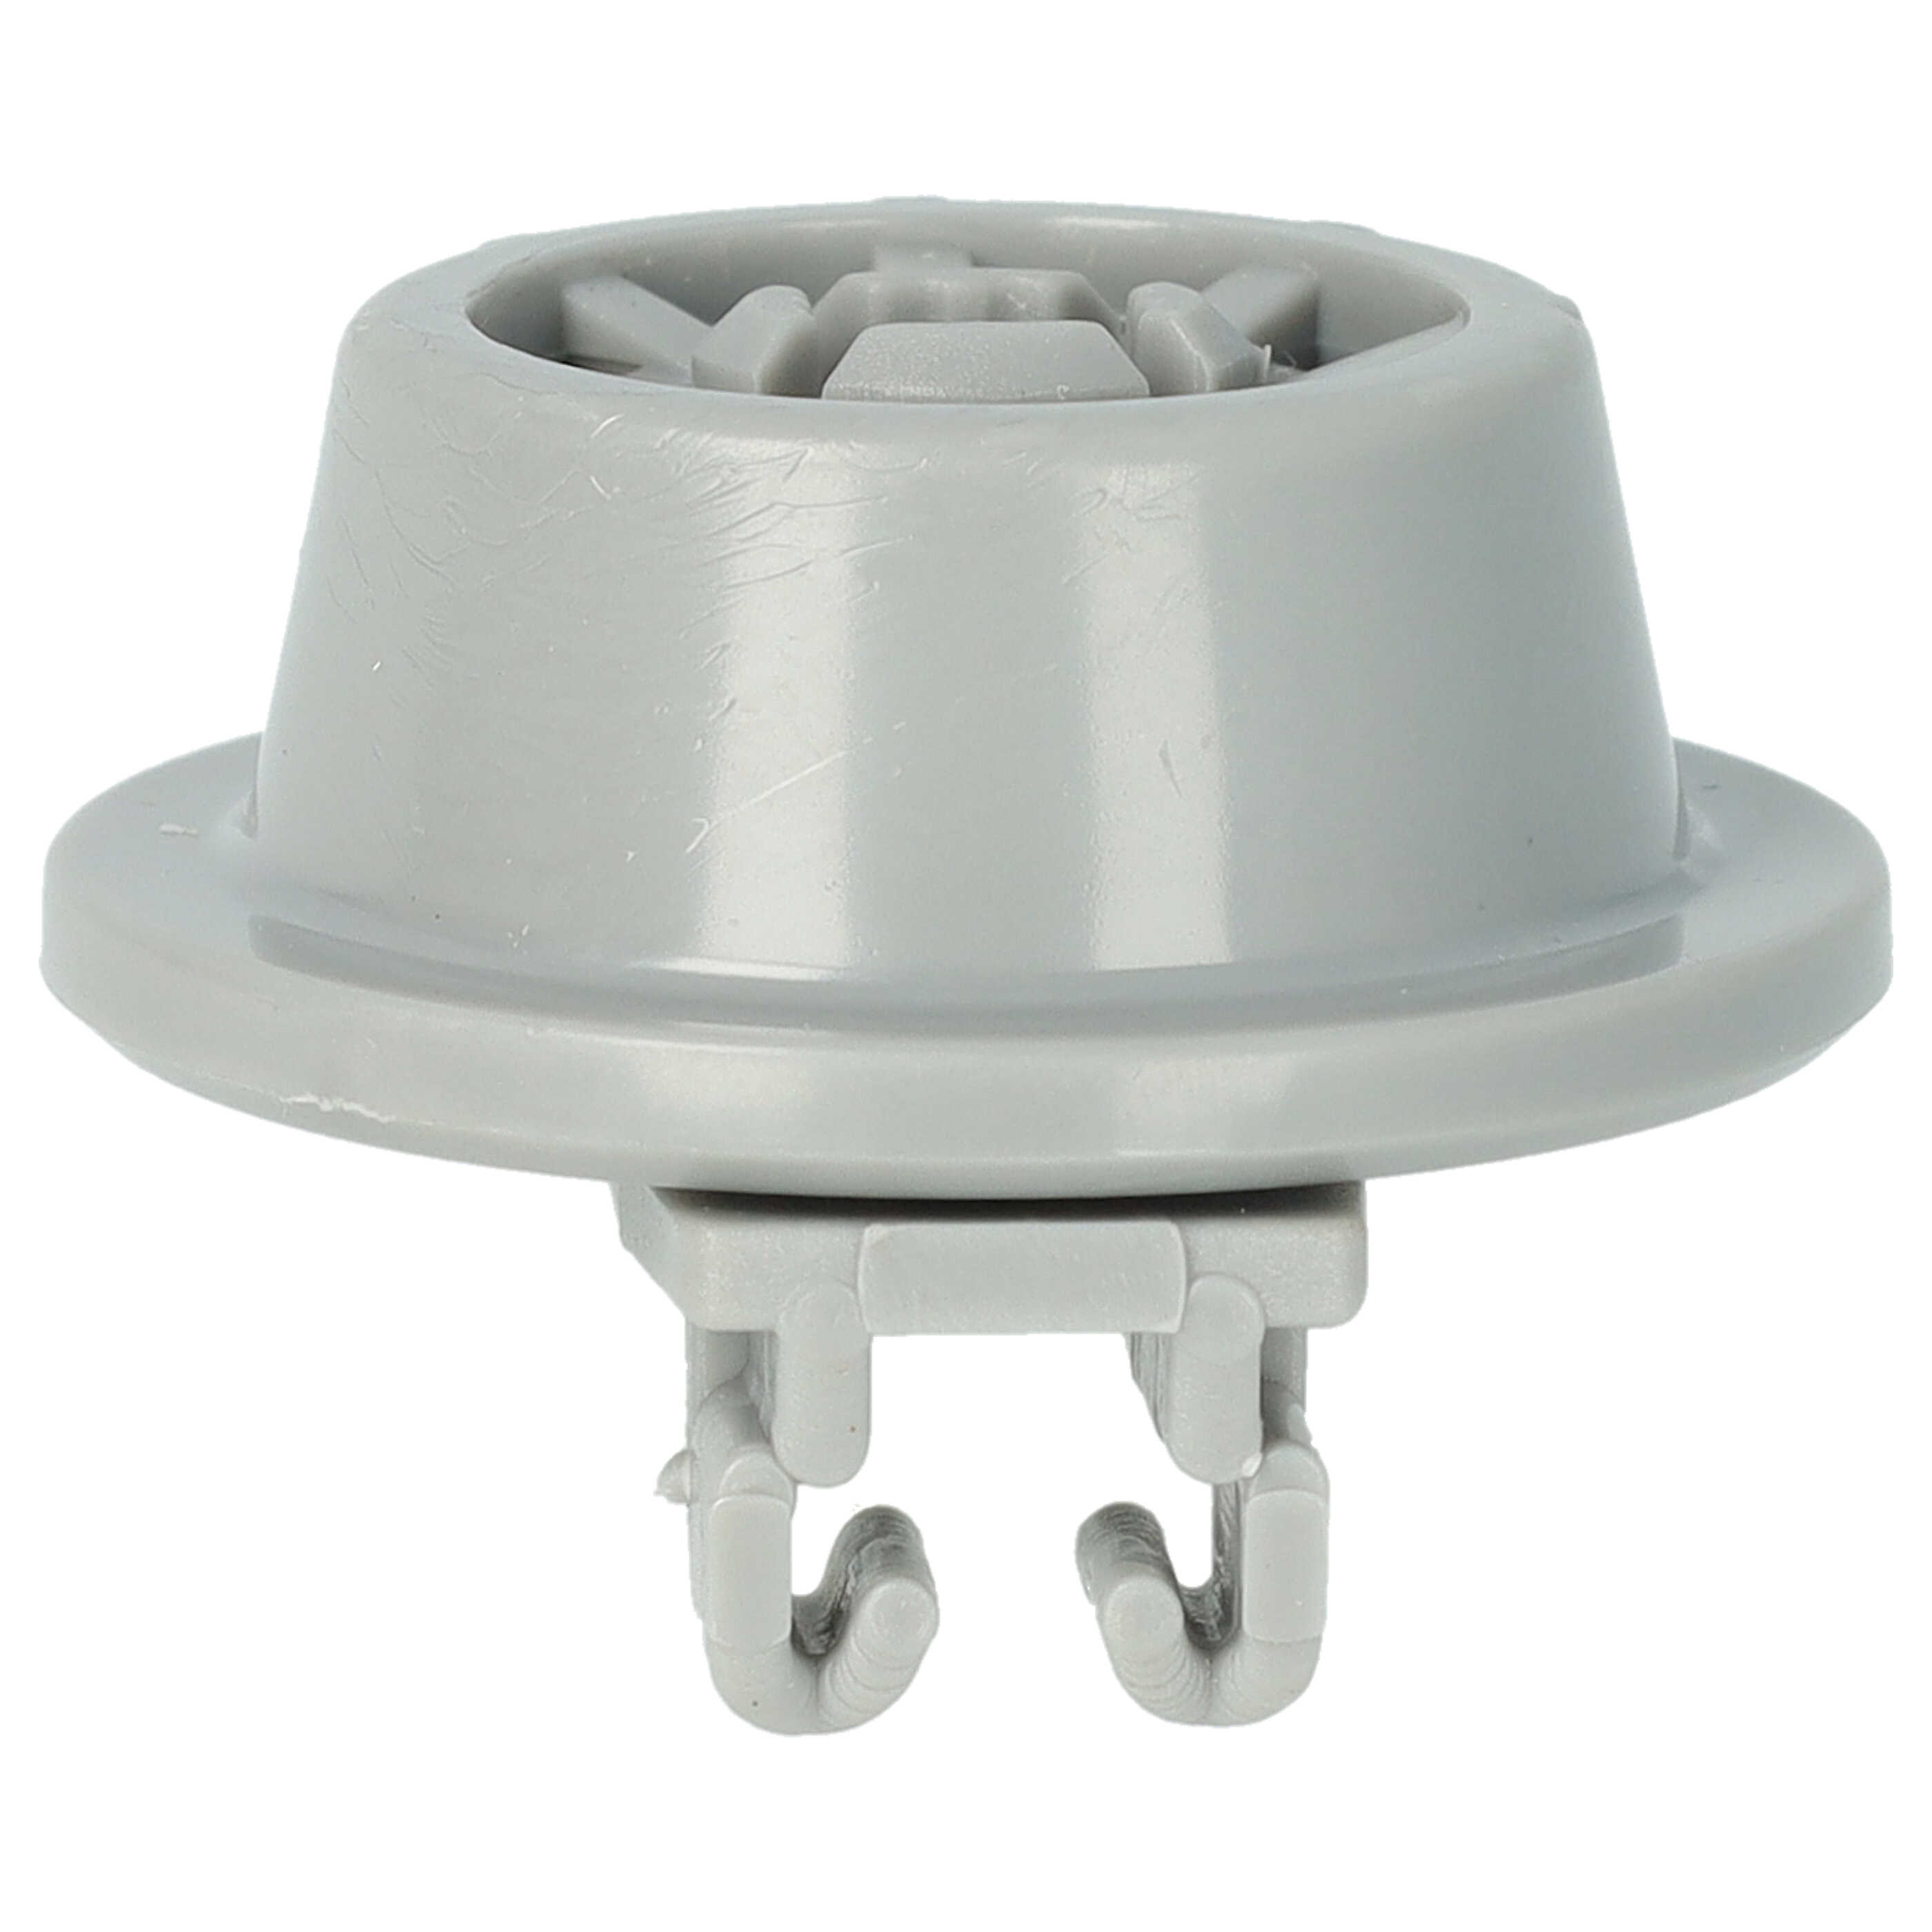 Lower Basket Wheel Diameter 35 mm replaces Bosch 00170838, 00183955, 00170834 for Hanseatic Dishwasher